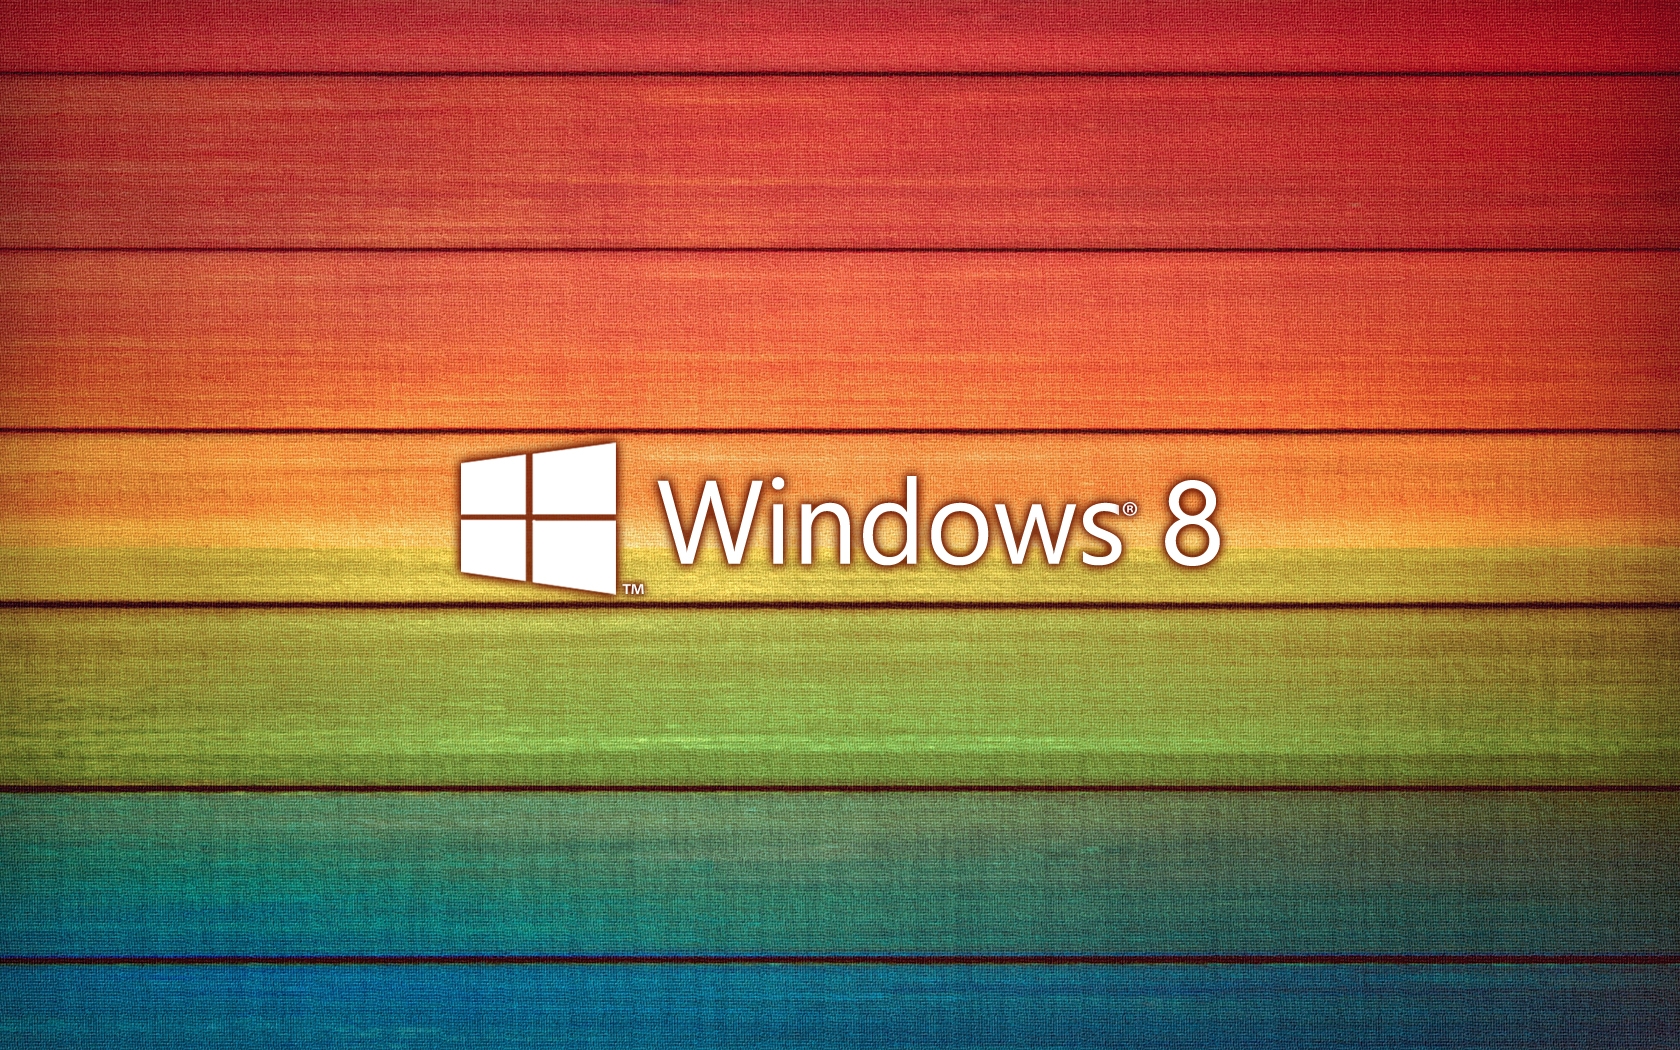 Wallpapers Windows 8 